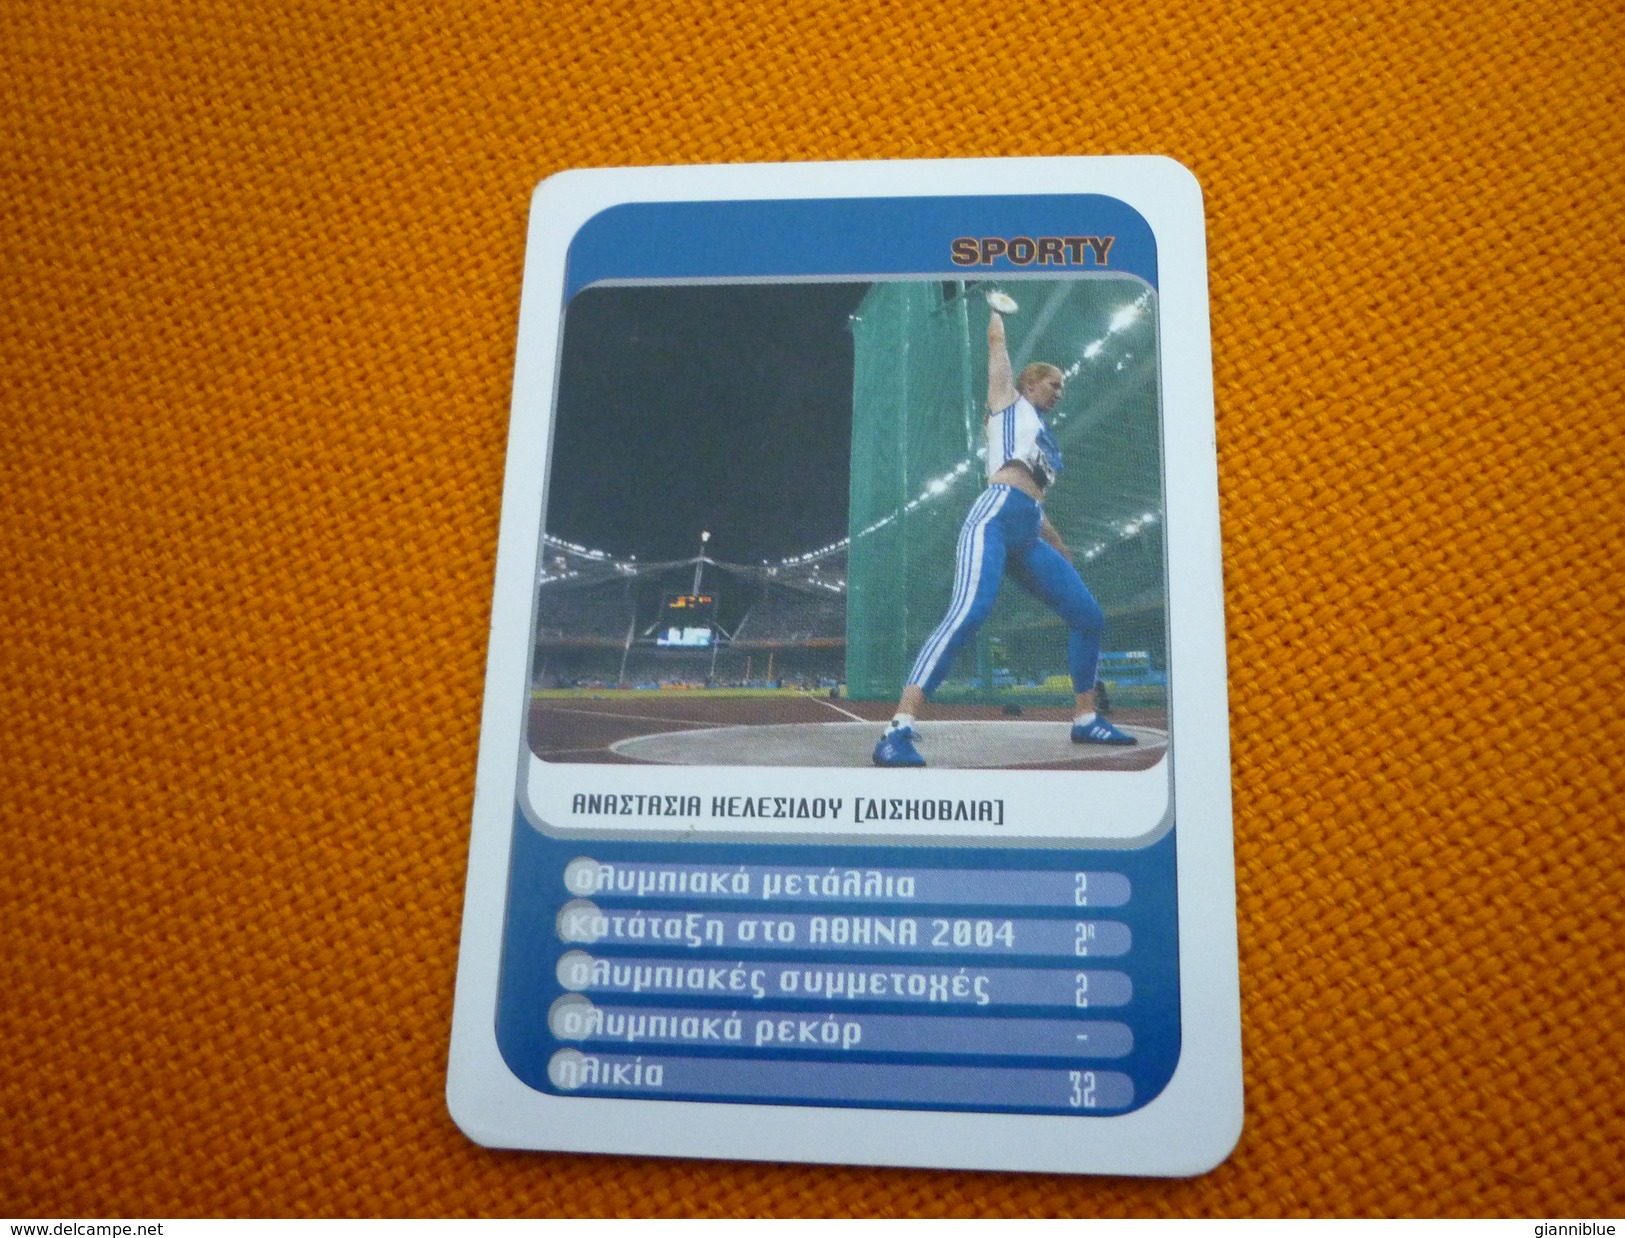 Anastasia Kelesidou Greek Discus Thrower Throwing Athens 2004 Olympic Games Medalist Greece Greek Trading Card - Trading Cards